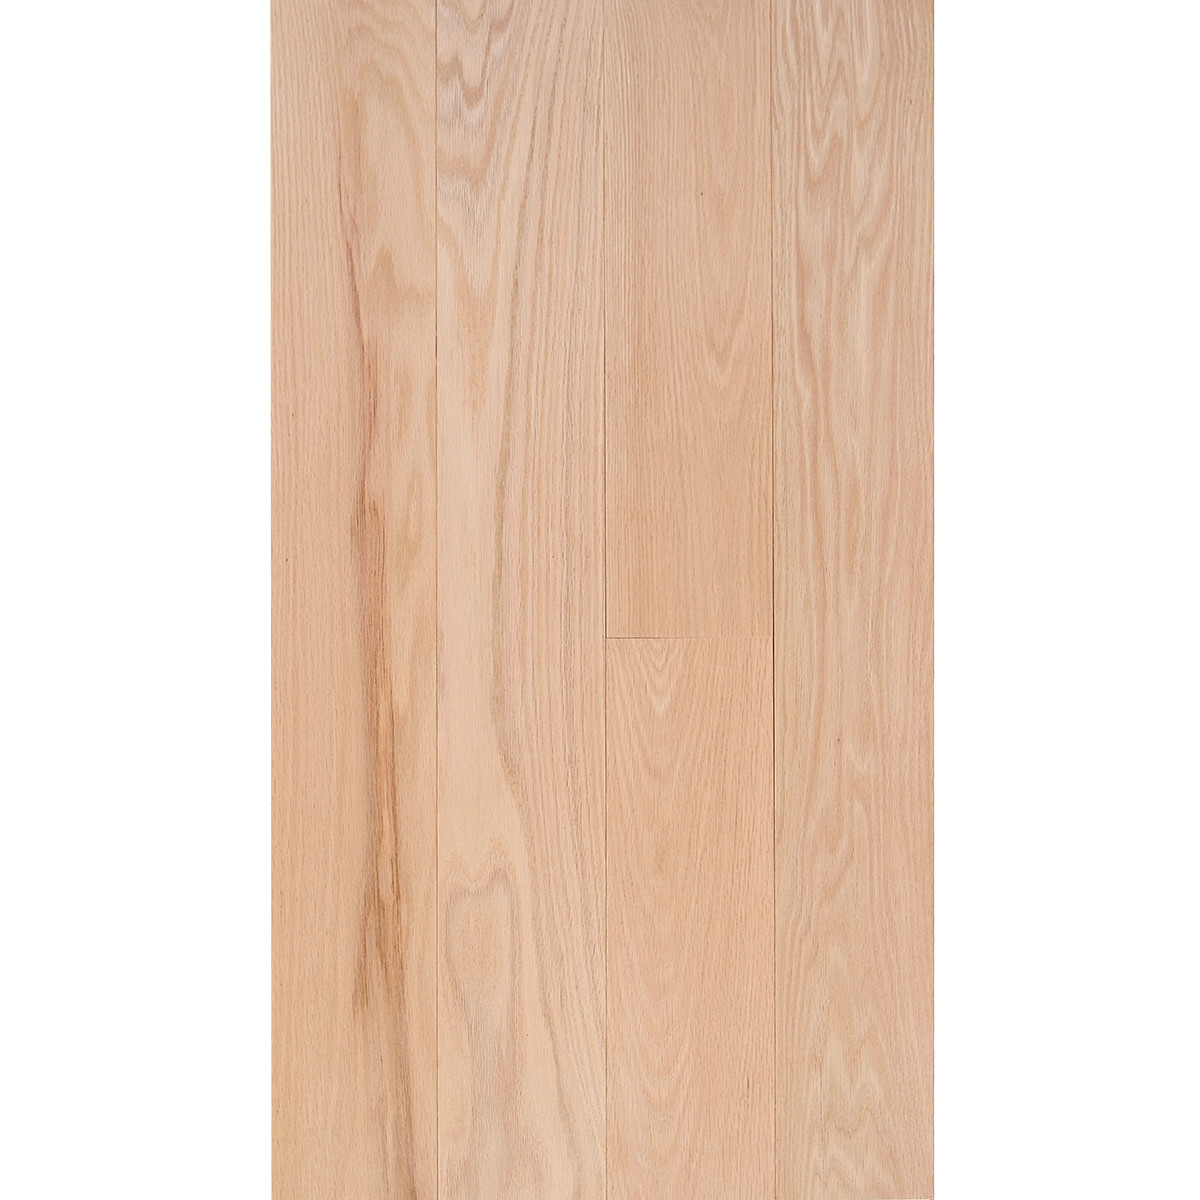 best unfinished hardwood flooring of red oak 3 4 x 5 select grade flooring regarding fs 5 redoak select em flooring